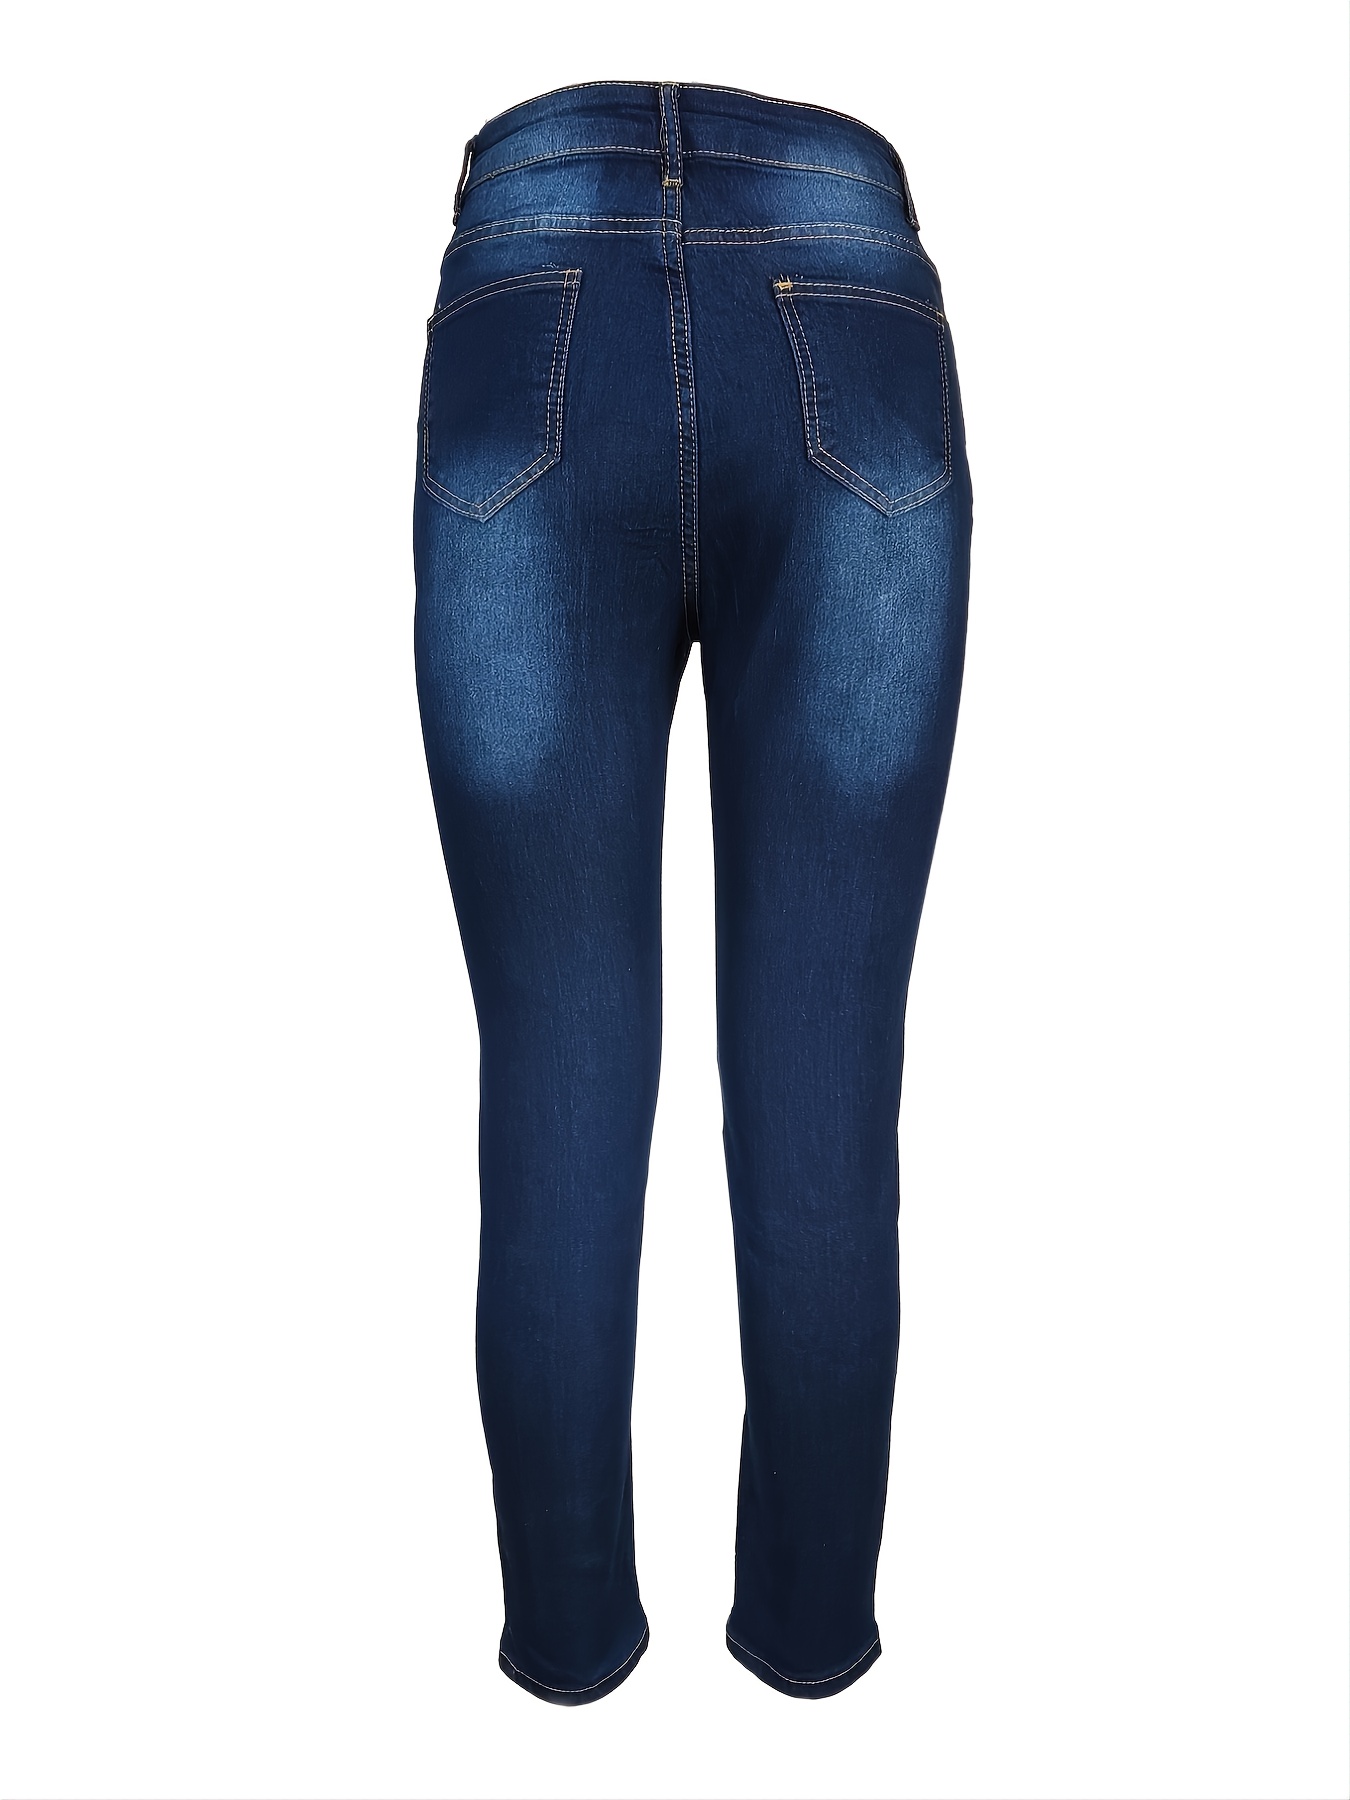 Fashion (light Blue)Pants Female Women's Jeans Large Size